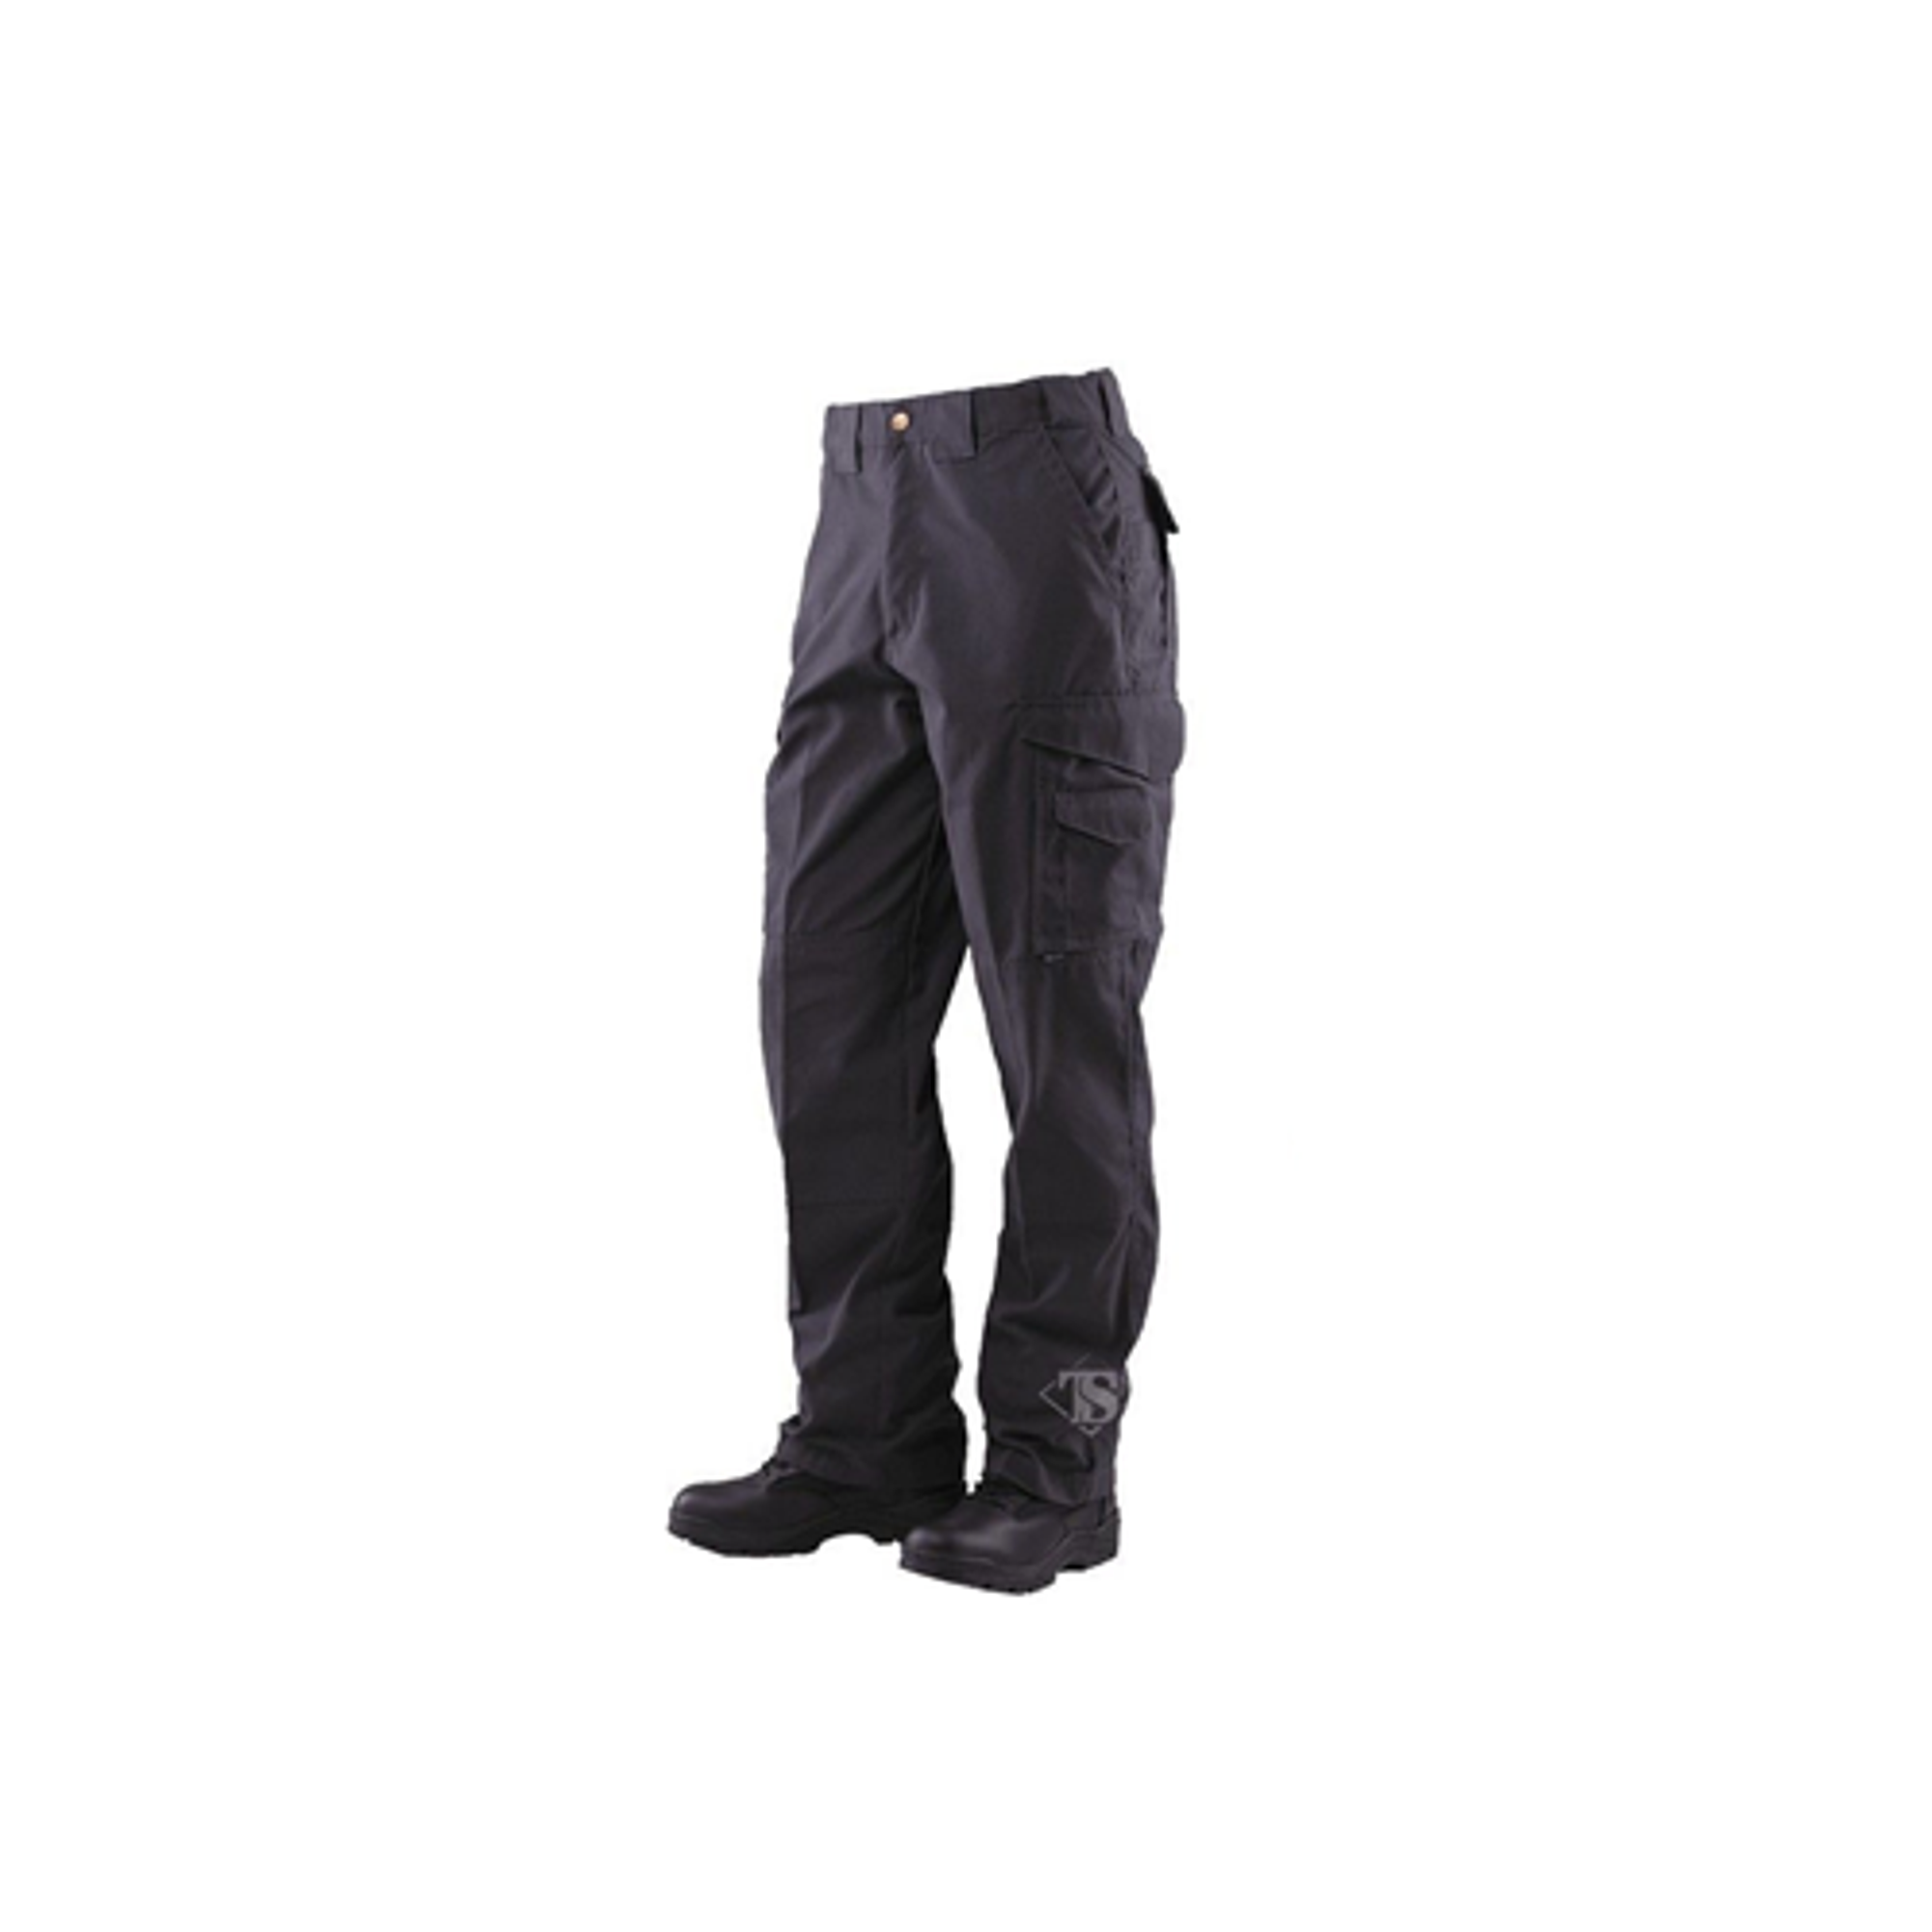 24-7 Original Tactical Pants - 6.5oz - Black - KRTSP-1062006